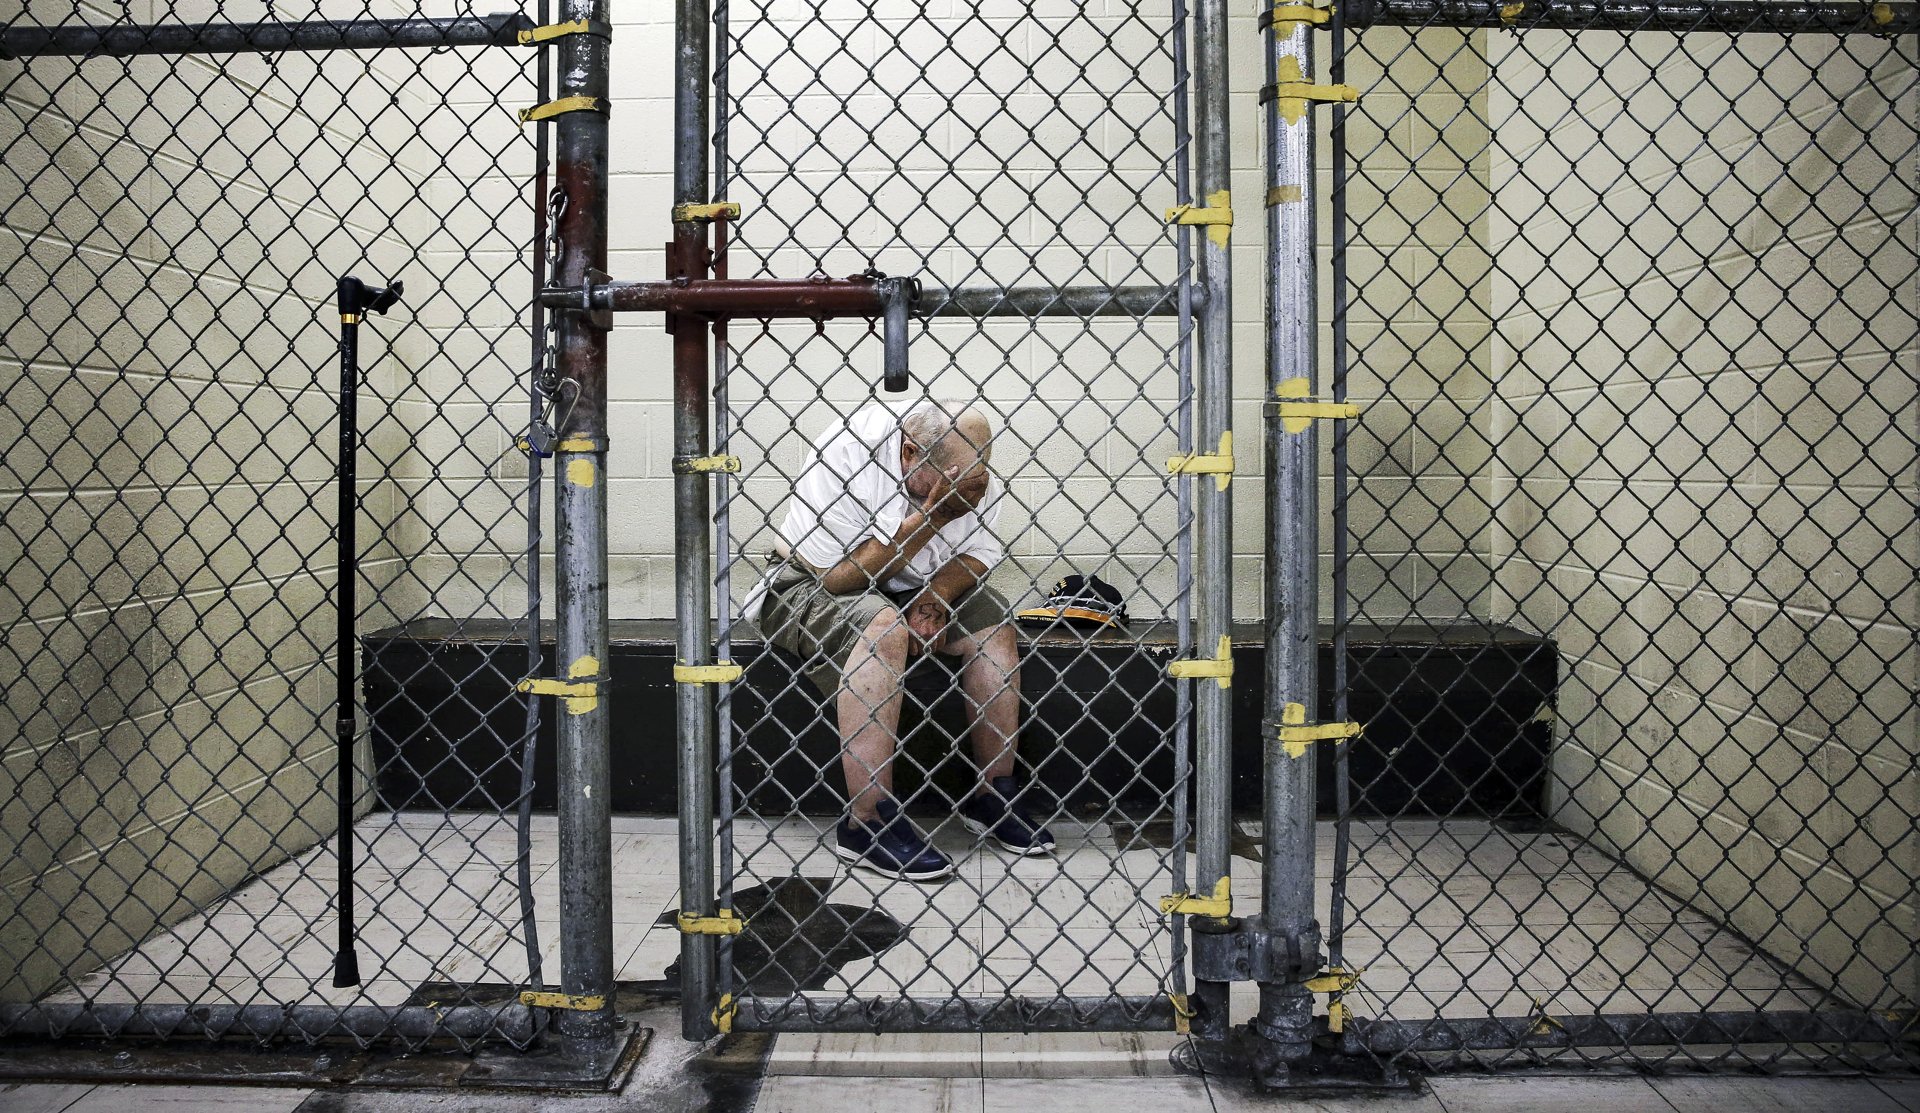 Nashville Prison Puts Mentally Ill Inmates in Danger